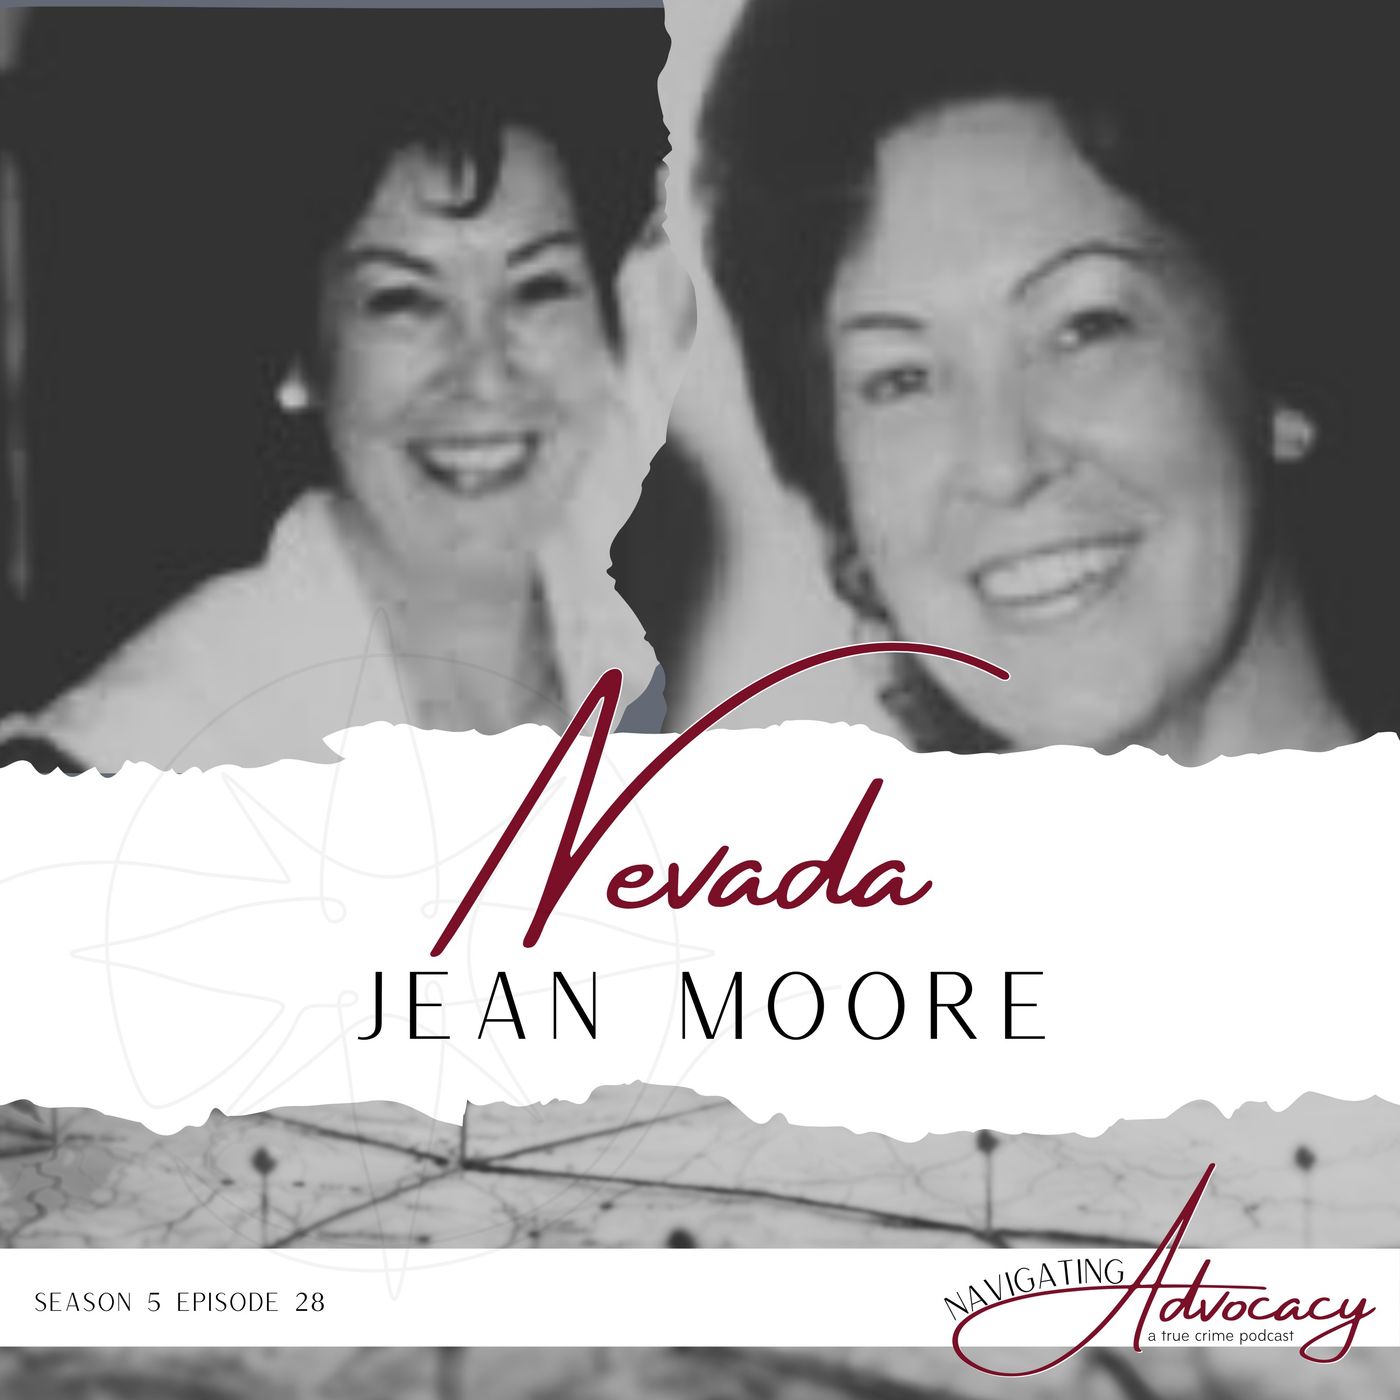 Nevada : Jean Moore